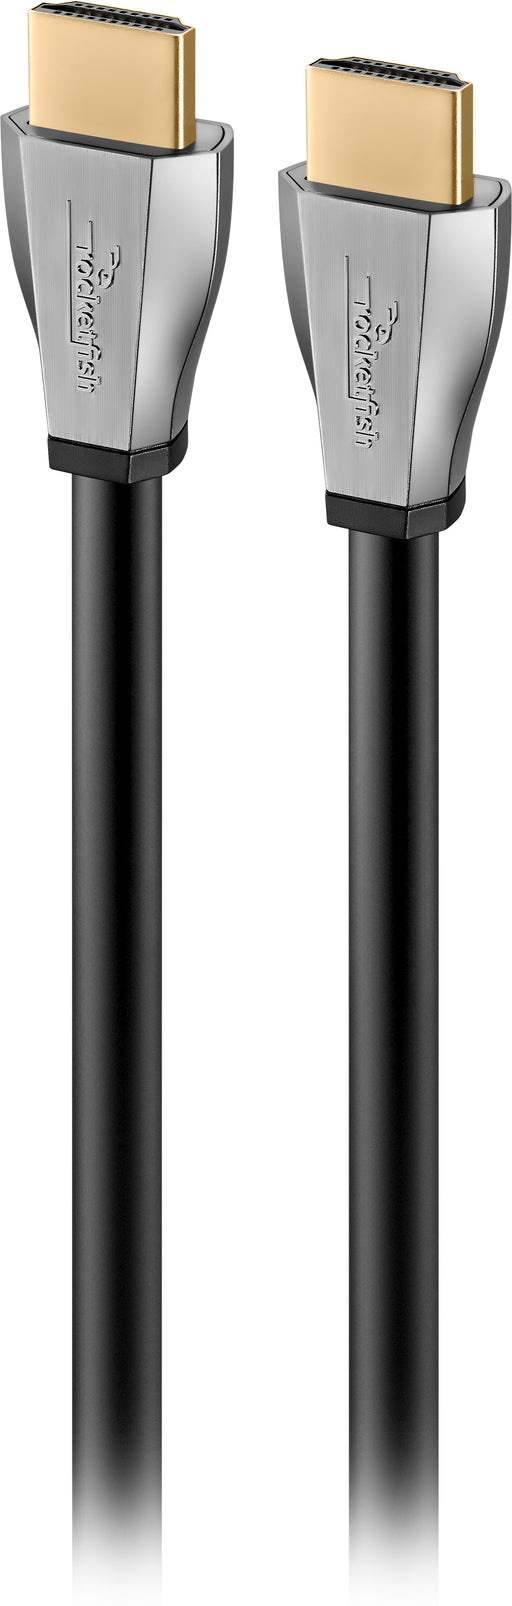 Rocketfish - 1.5' 4K UltraHD/HDR In-Wall Rated HDMI Cable - Black